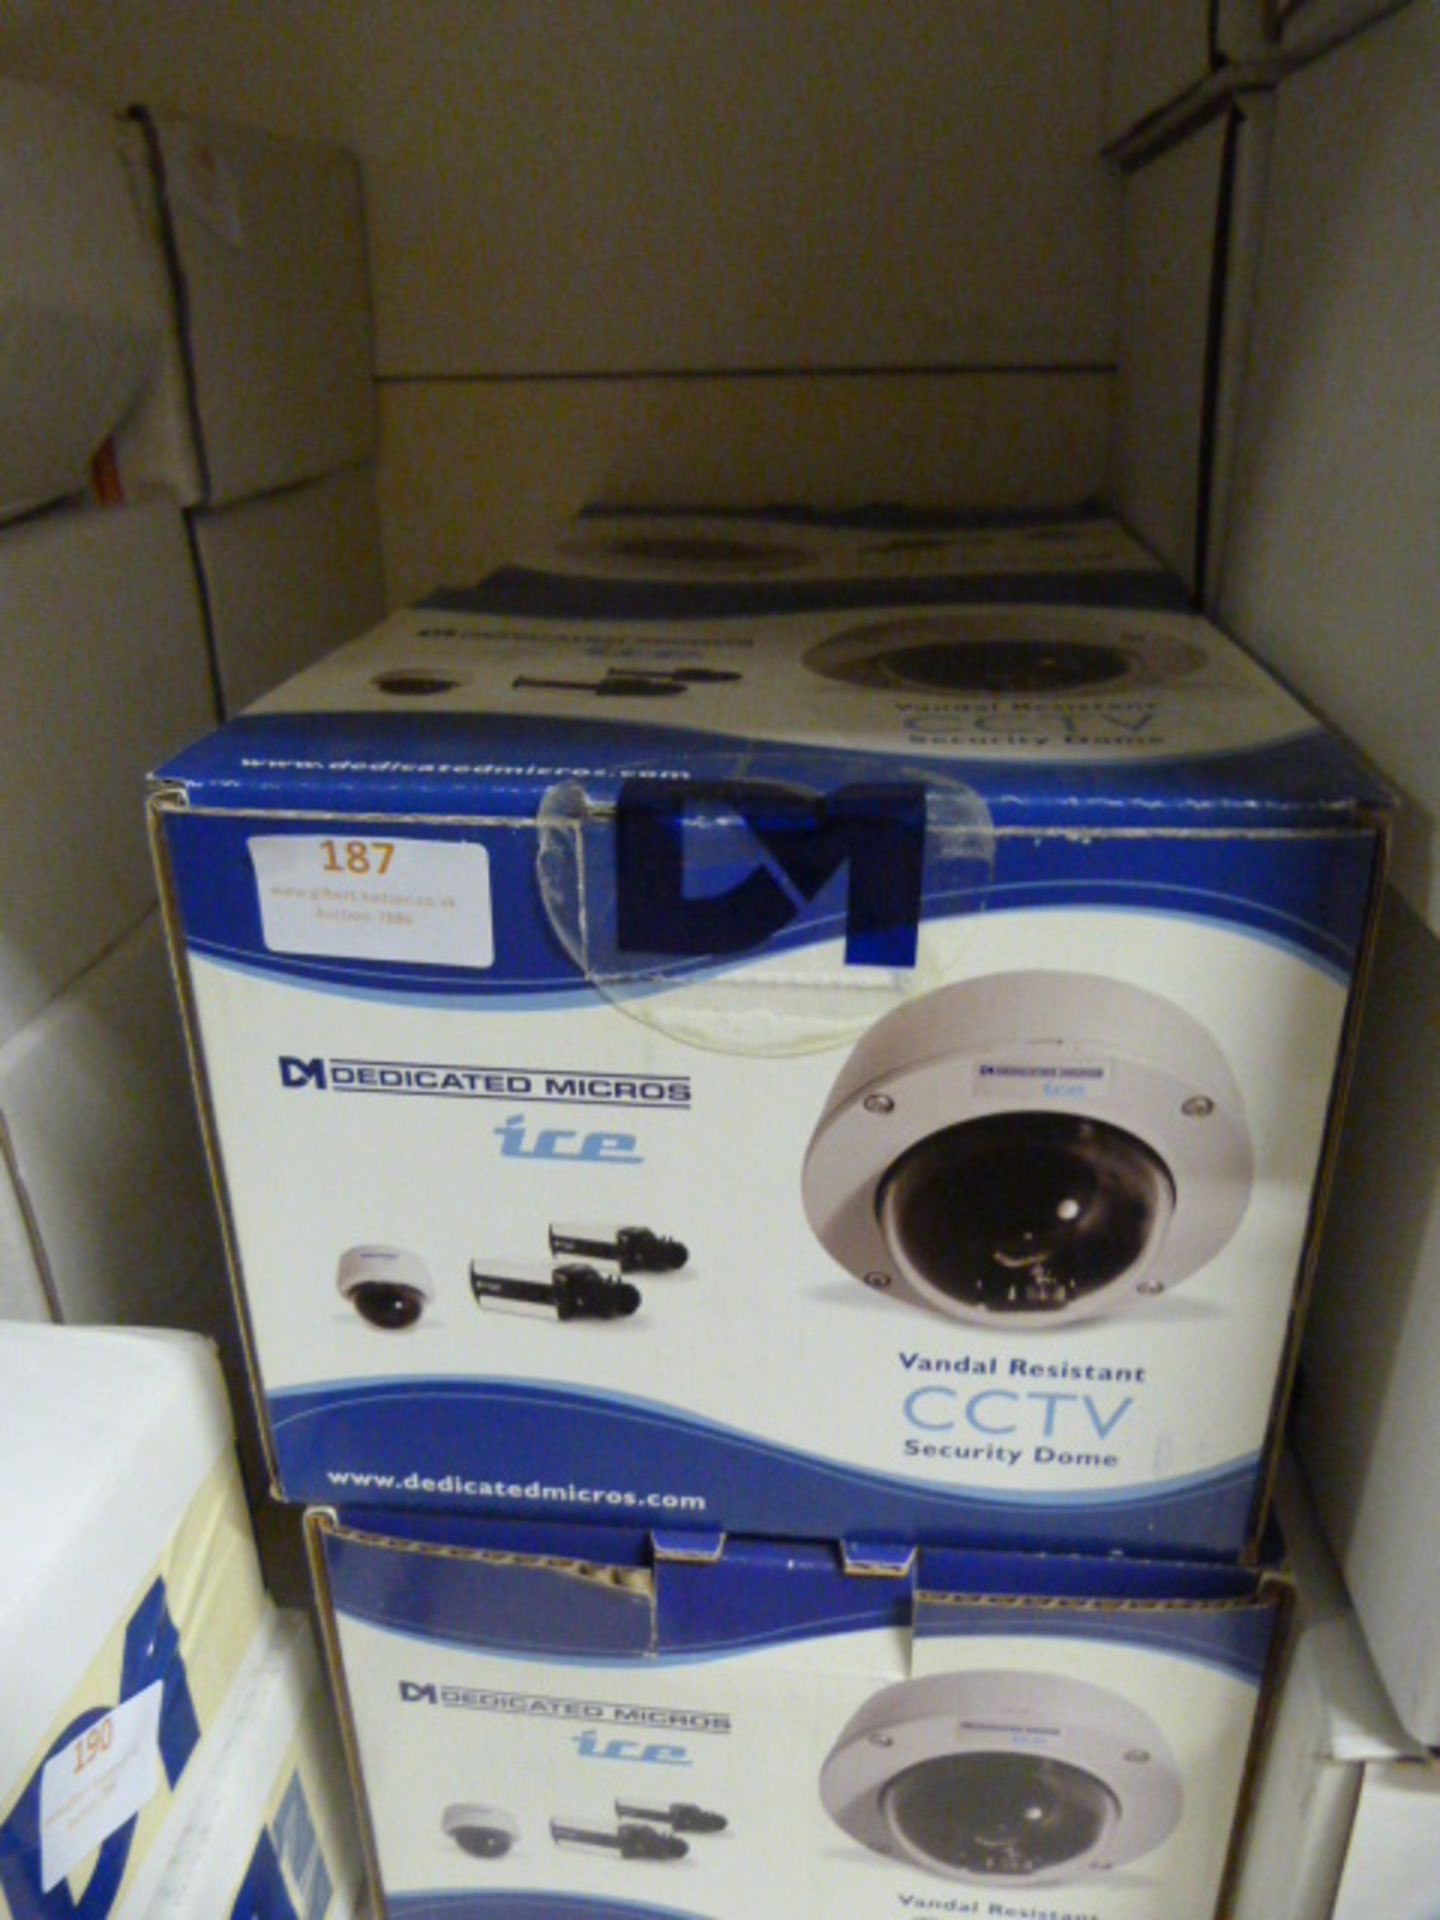 *Four Dedicated Micros Ice Vandal Resistant CCTV D